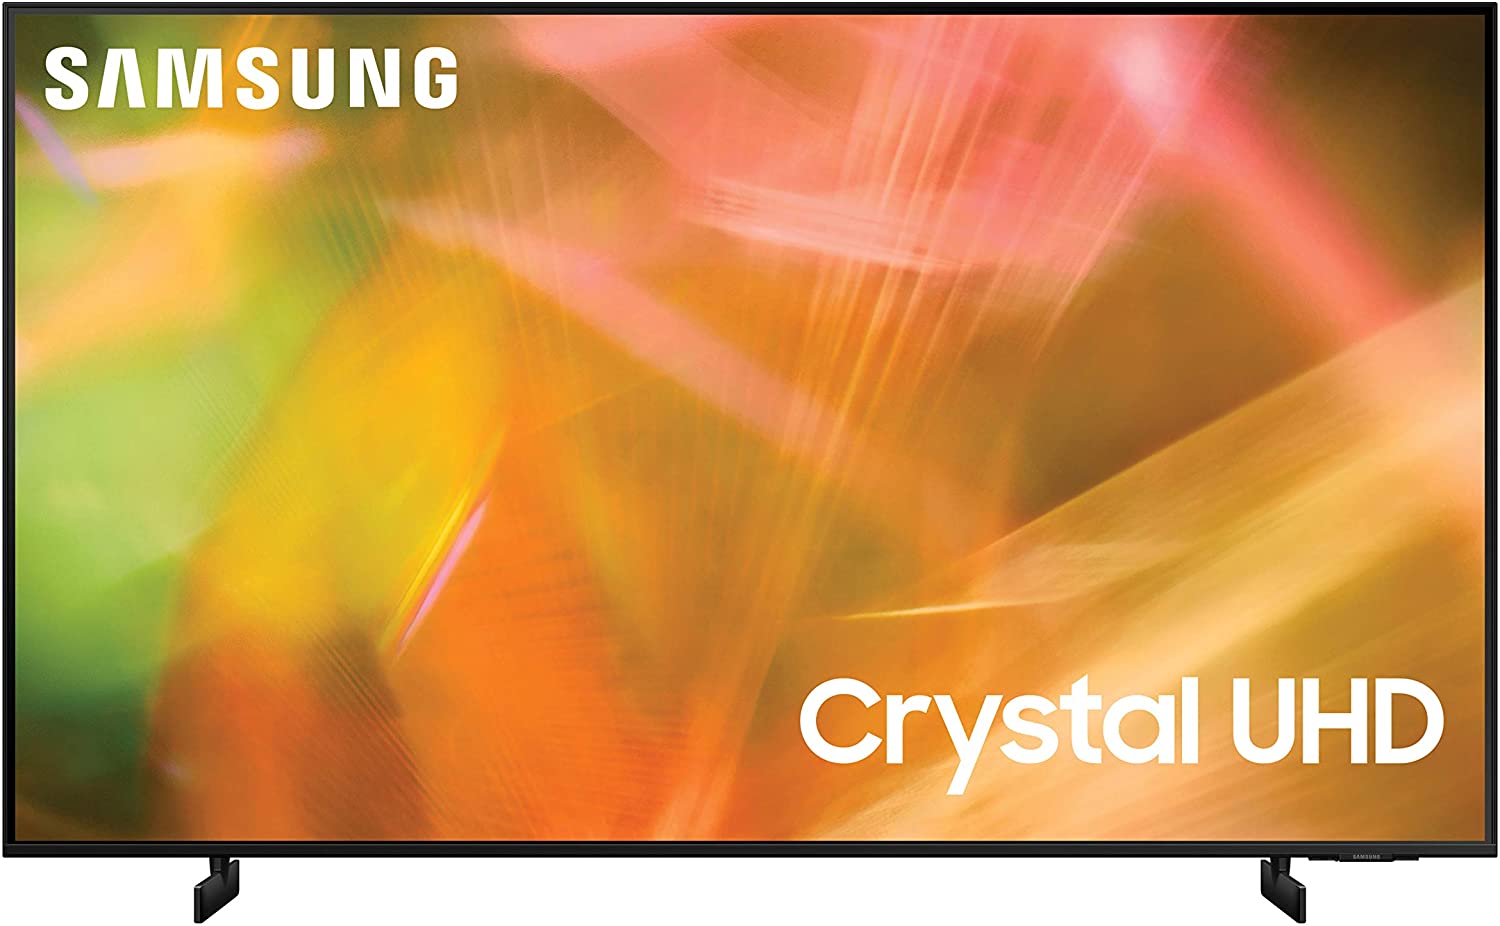 Samsung 85″ Crystal UHD Smart TV Pre Black Friday Deal